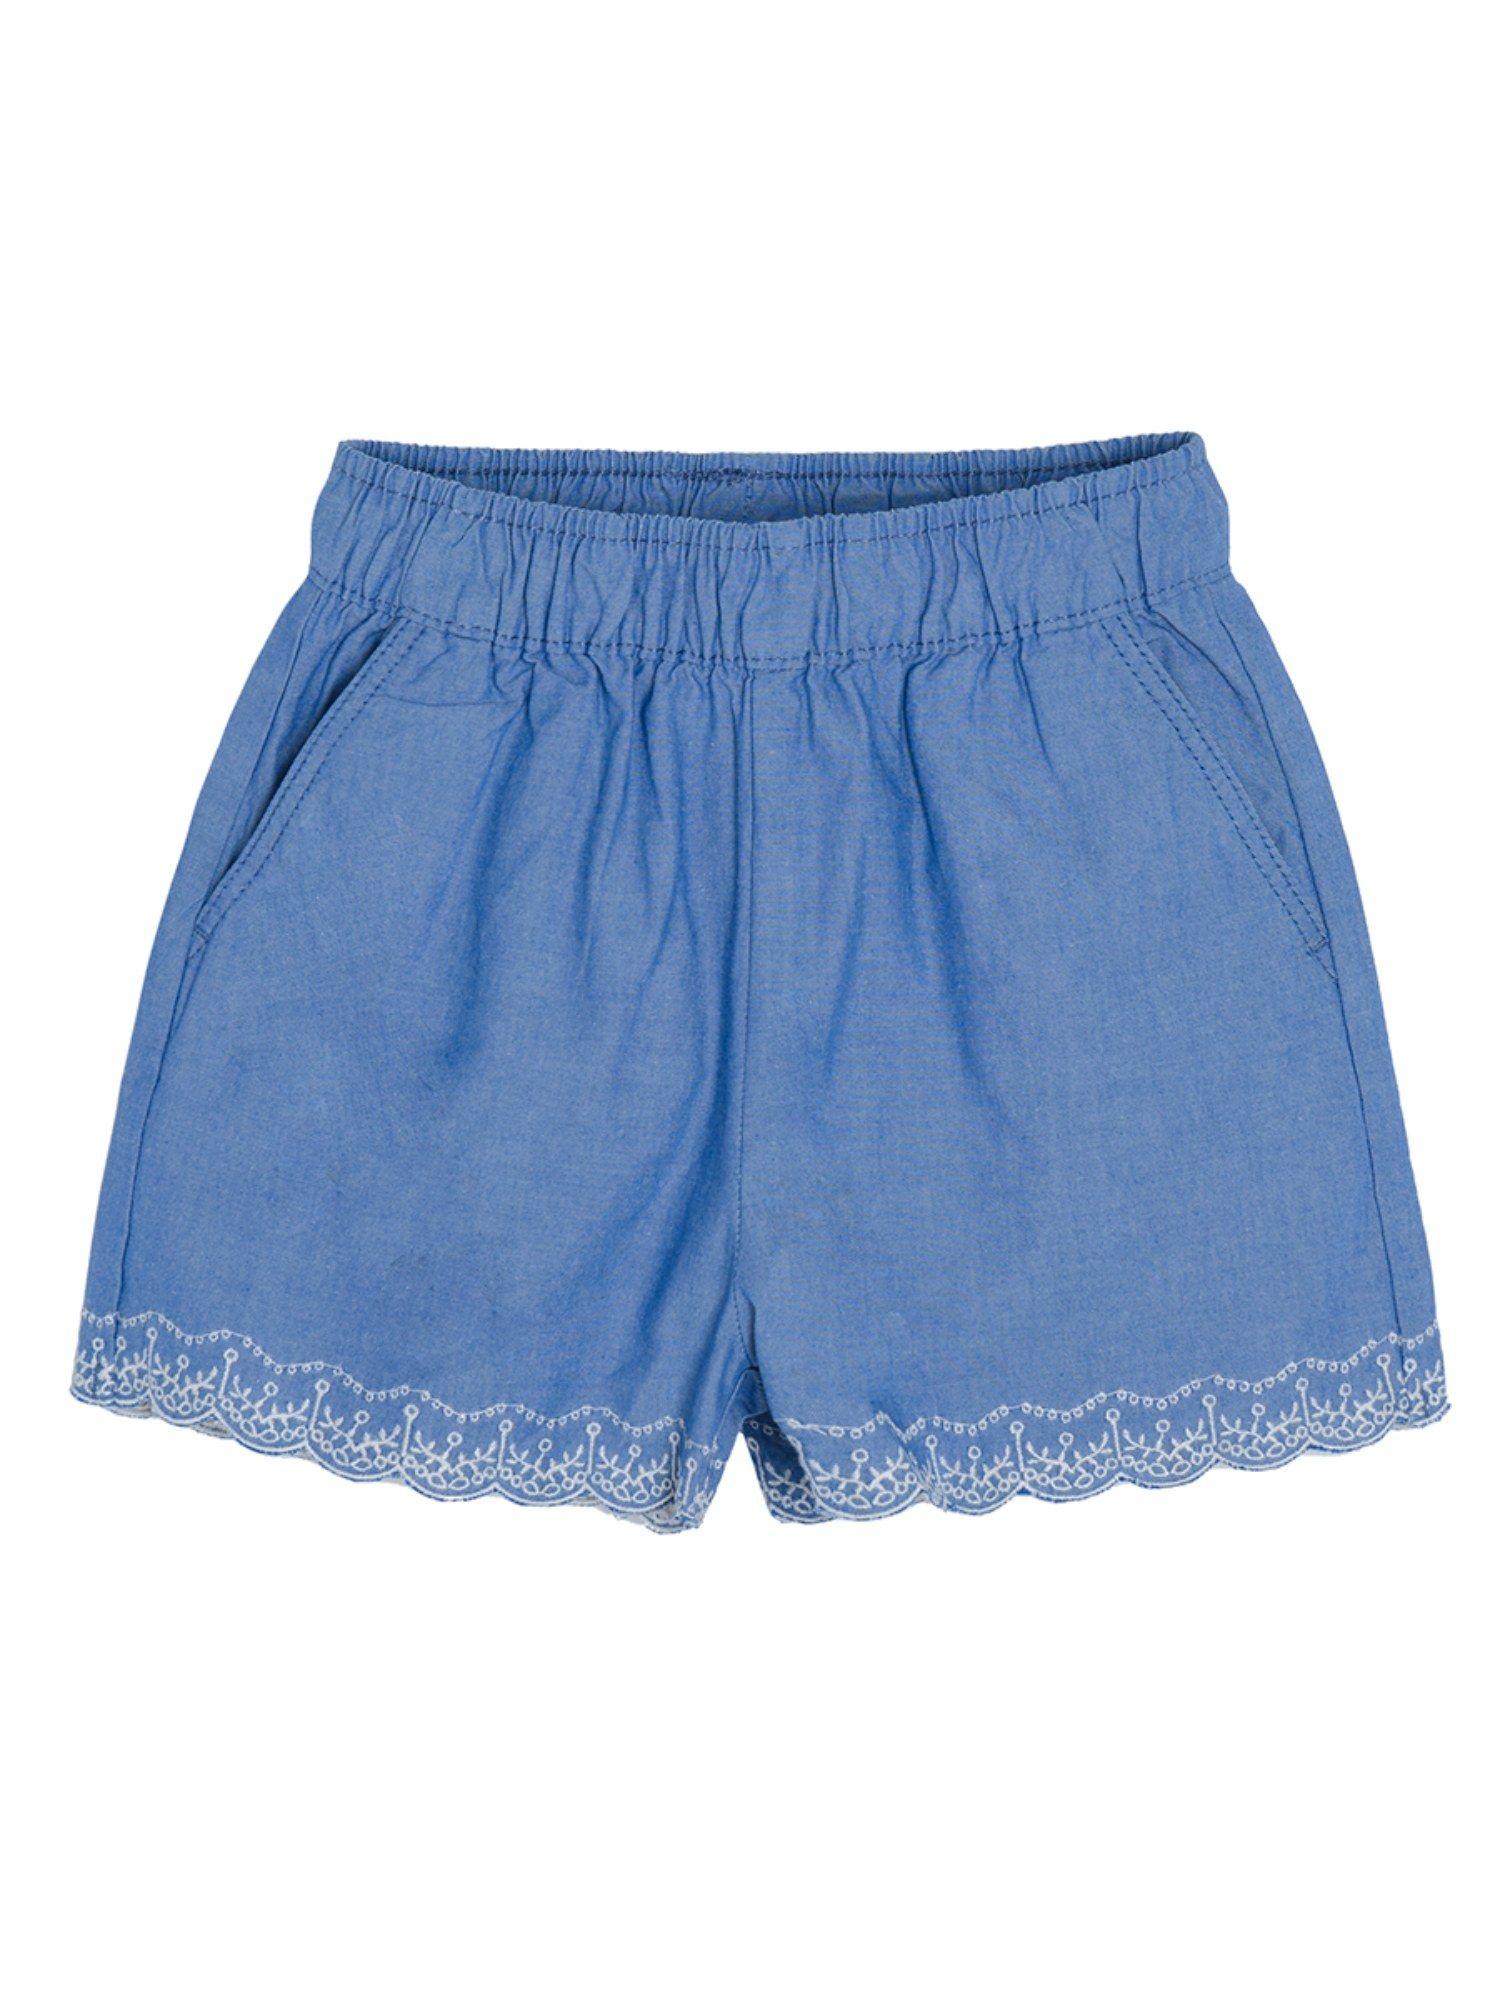 smyk-girls-blue-woven-shorts